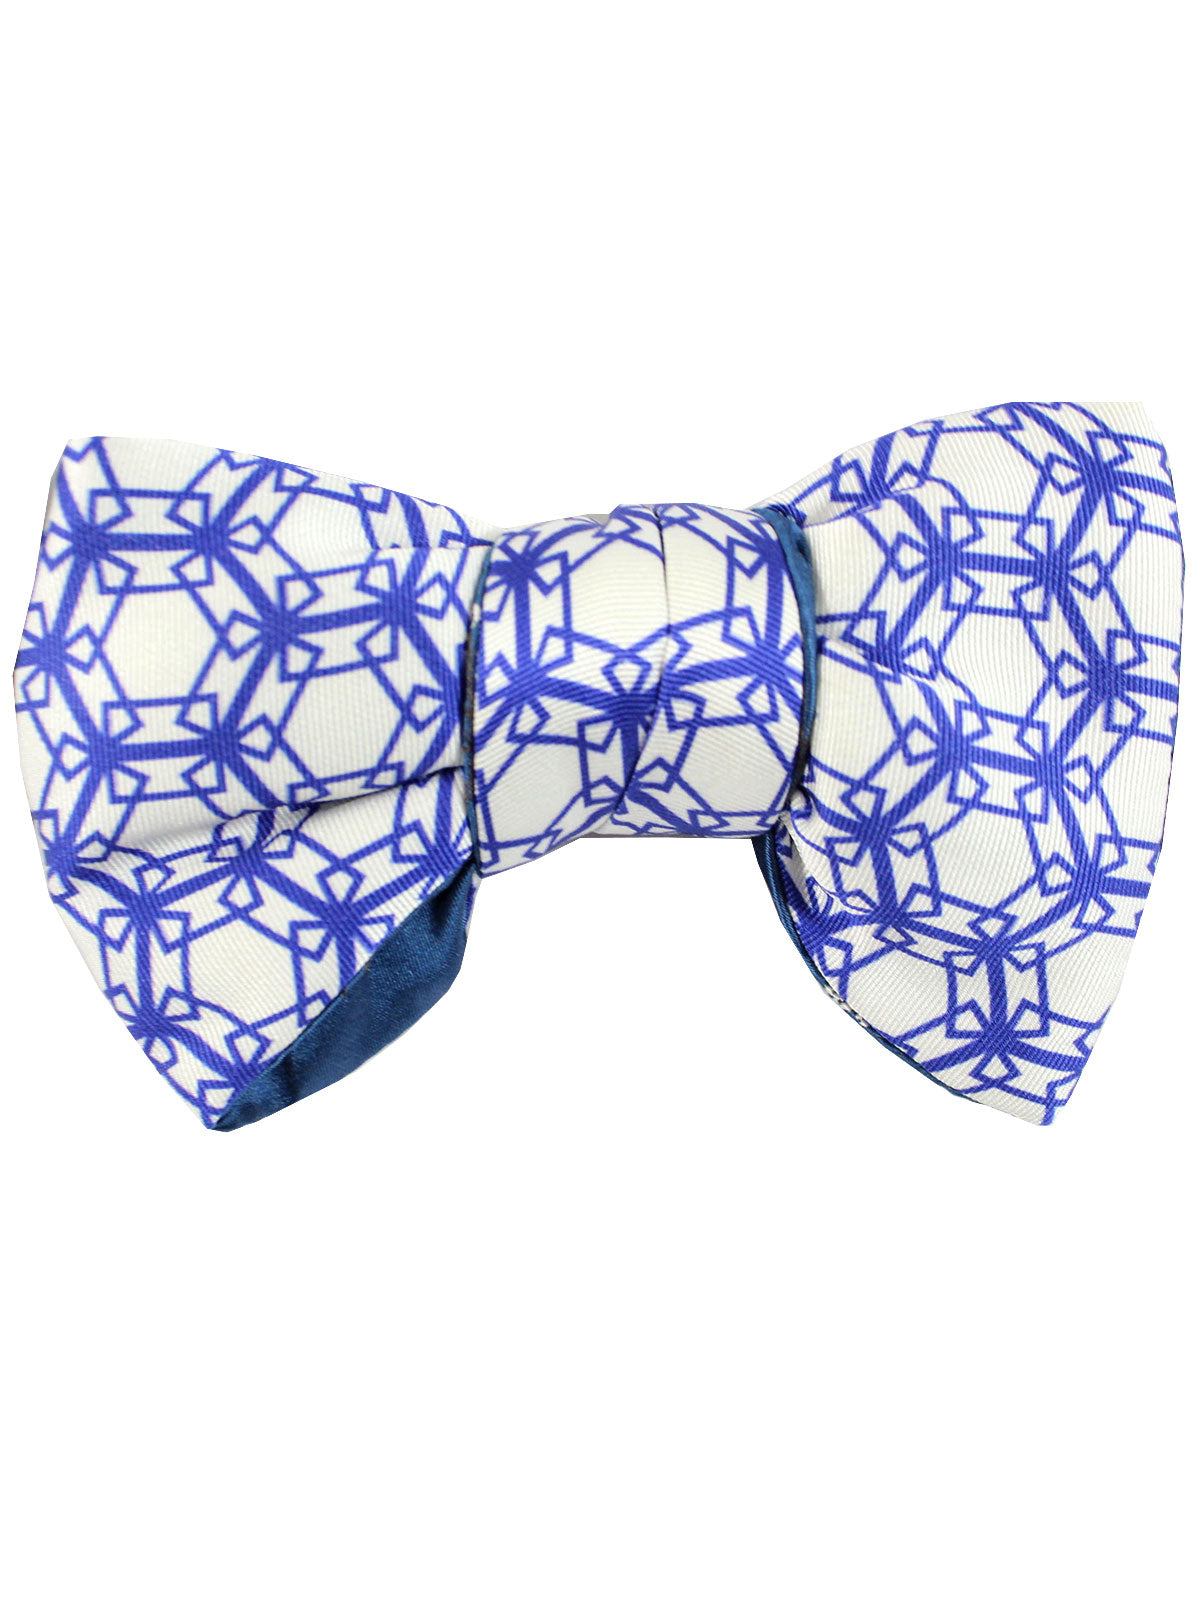 Le Noeud Papillon Silk Bow Tie White Blue Geometric Floral - Self Tie